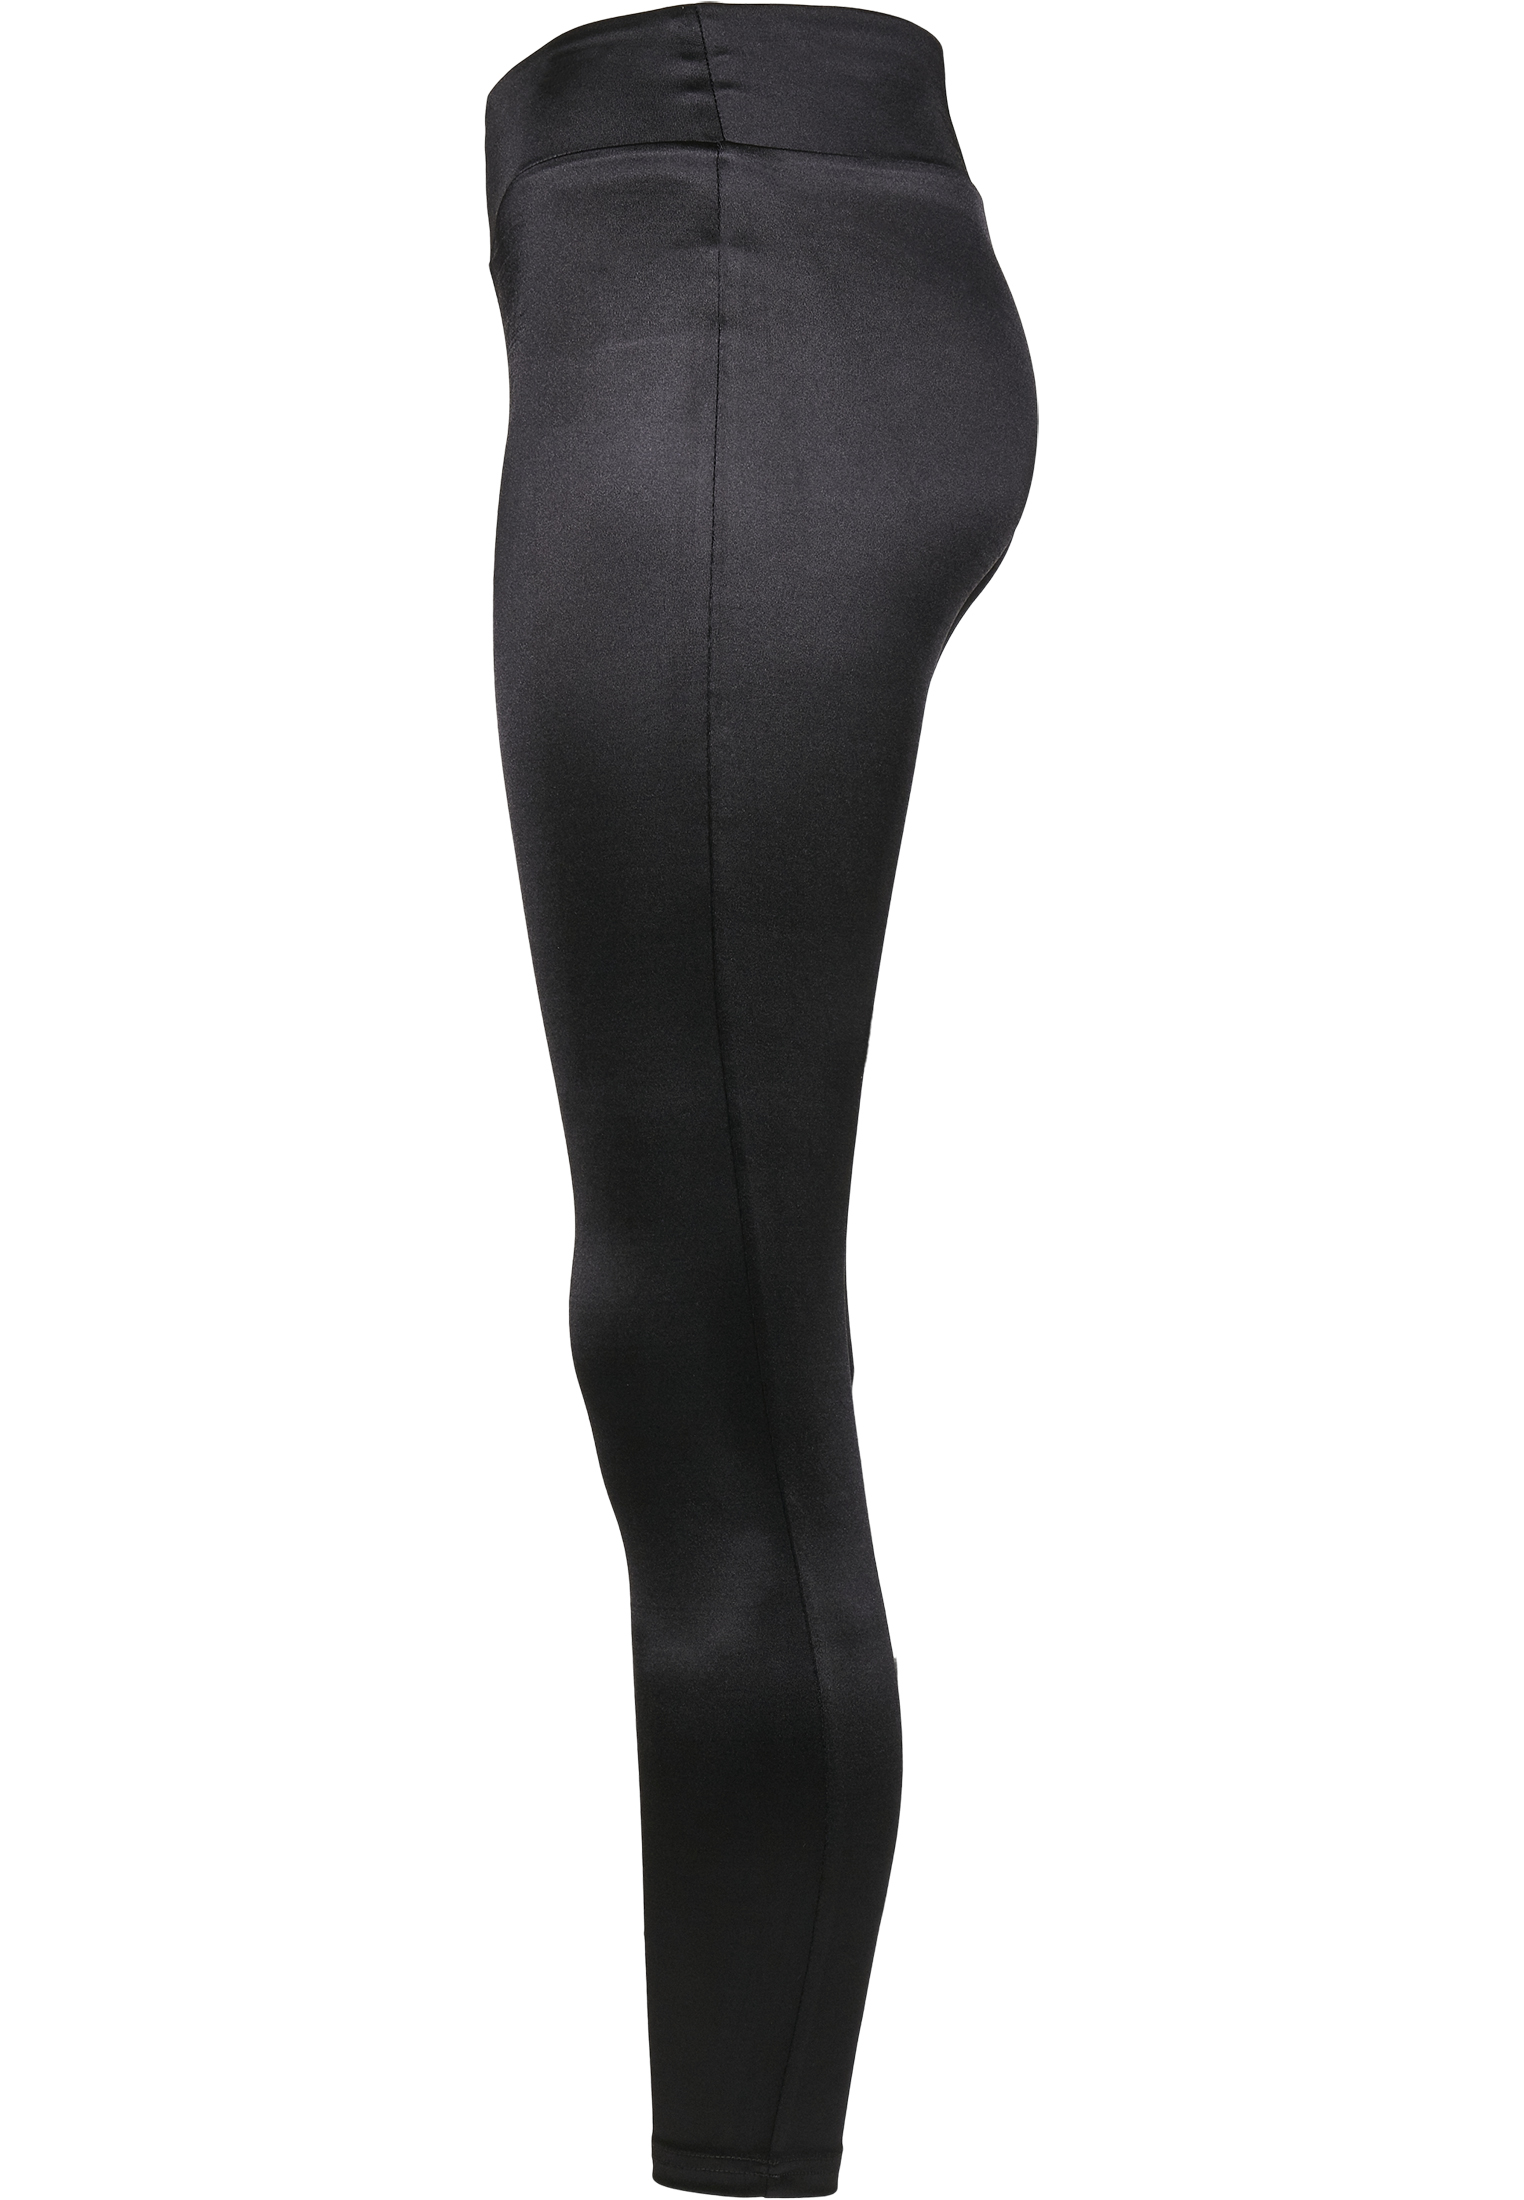 Curvy Ladies Shiny High Waist Leggings in Farbe black